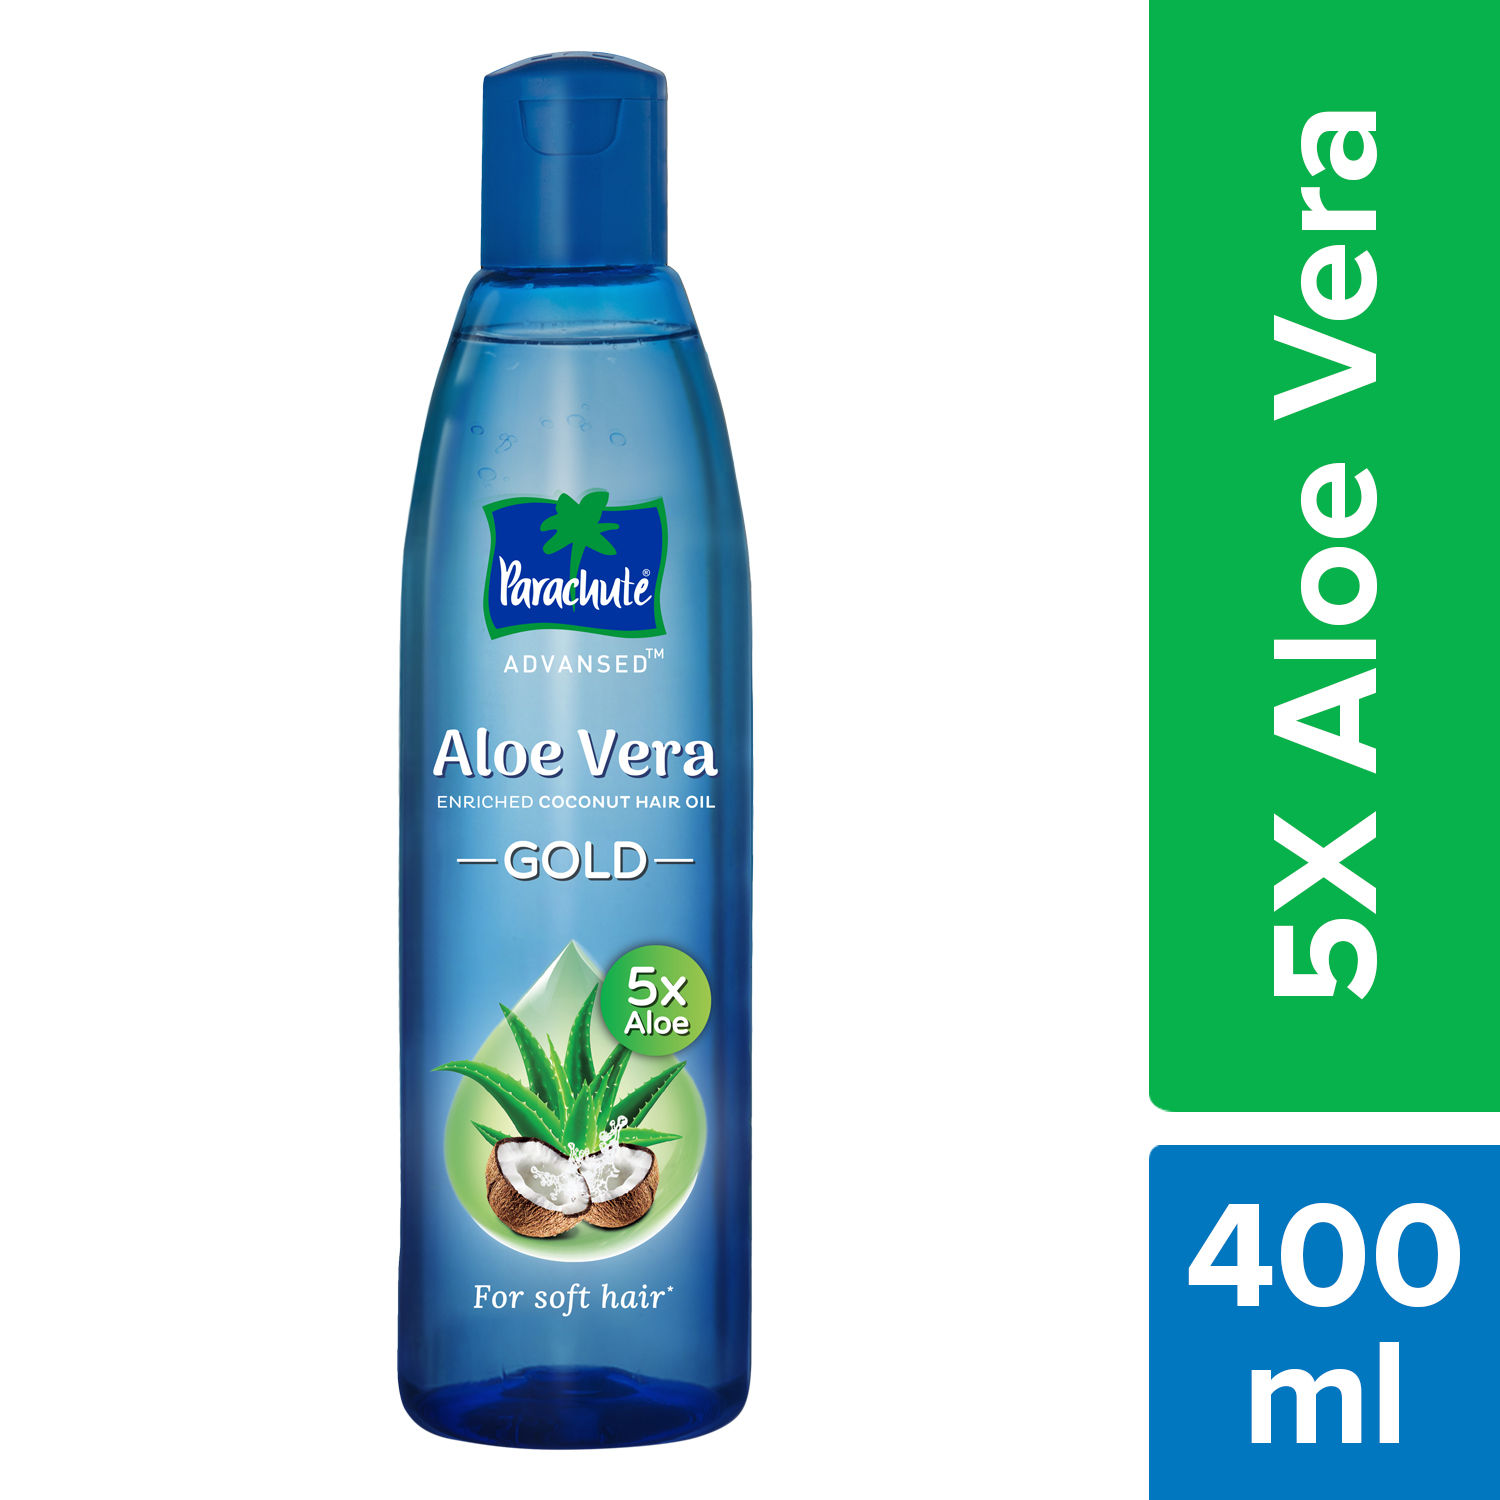 Buy Parachute Advansed Aloe Vera Enriched Coconut Hair Oil GOLD | 5X Aloe Vera with Coconut Oil| Makes hair Sooperr soft | 400ml - Purplle